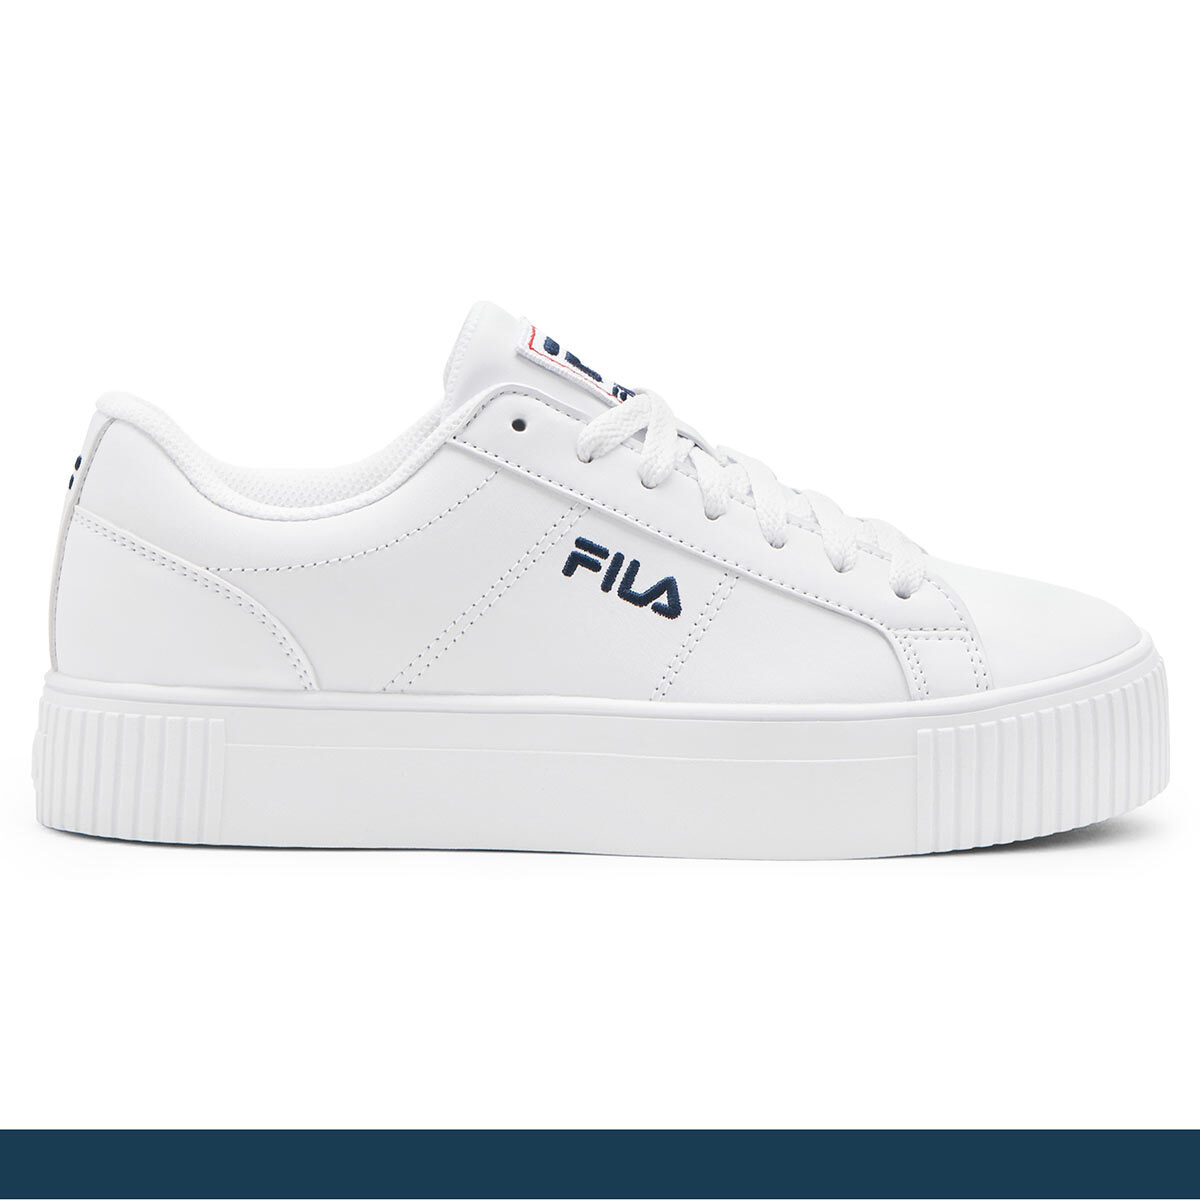 snelweg argument Regeren Fila Redmond Women's Shoes in White and 7 Sizes | Costco UK